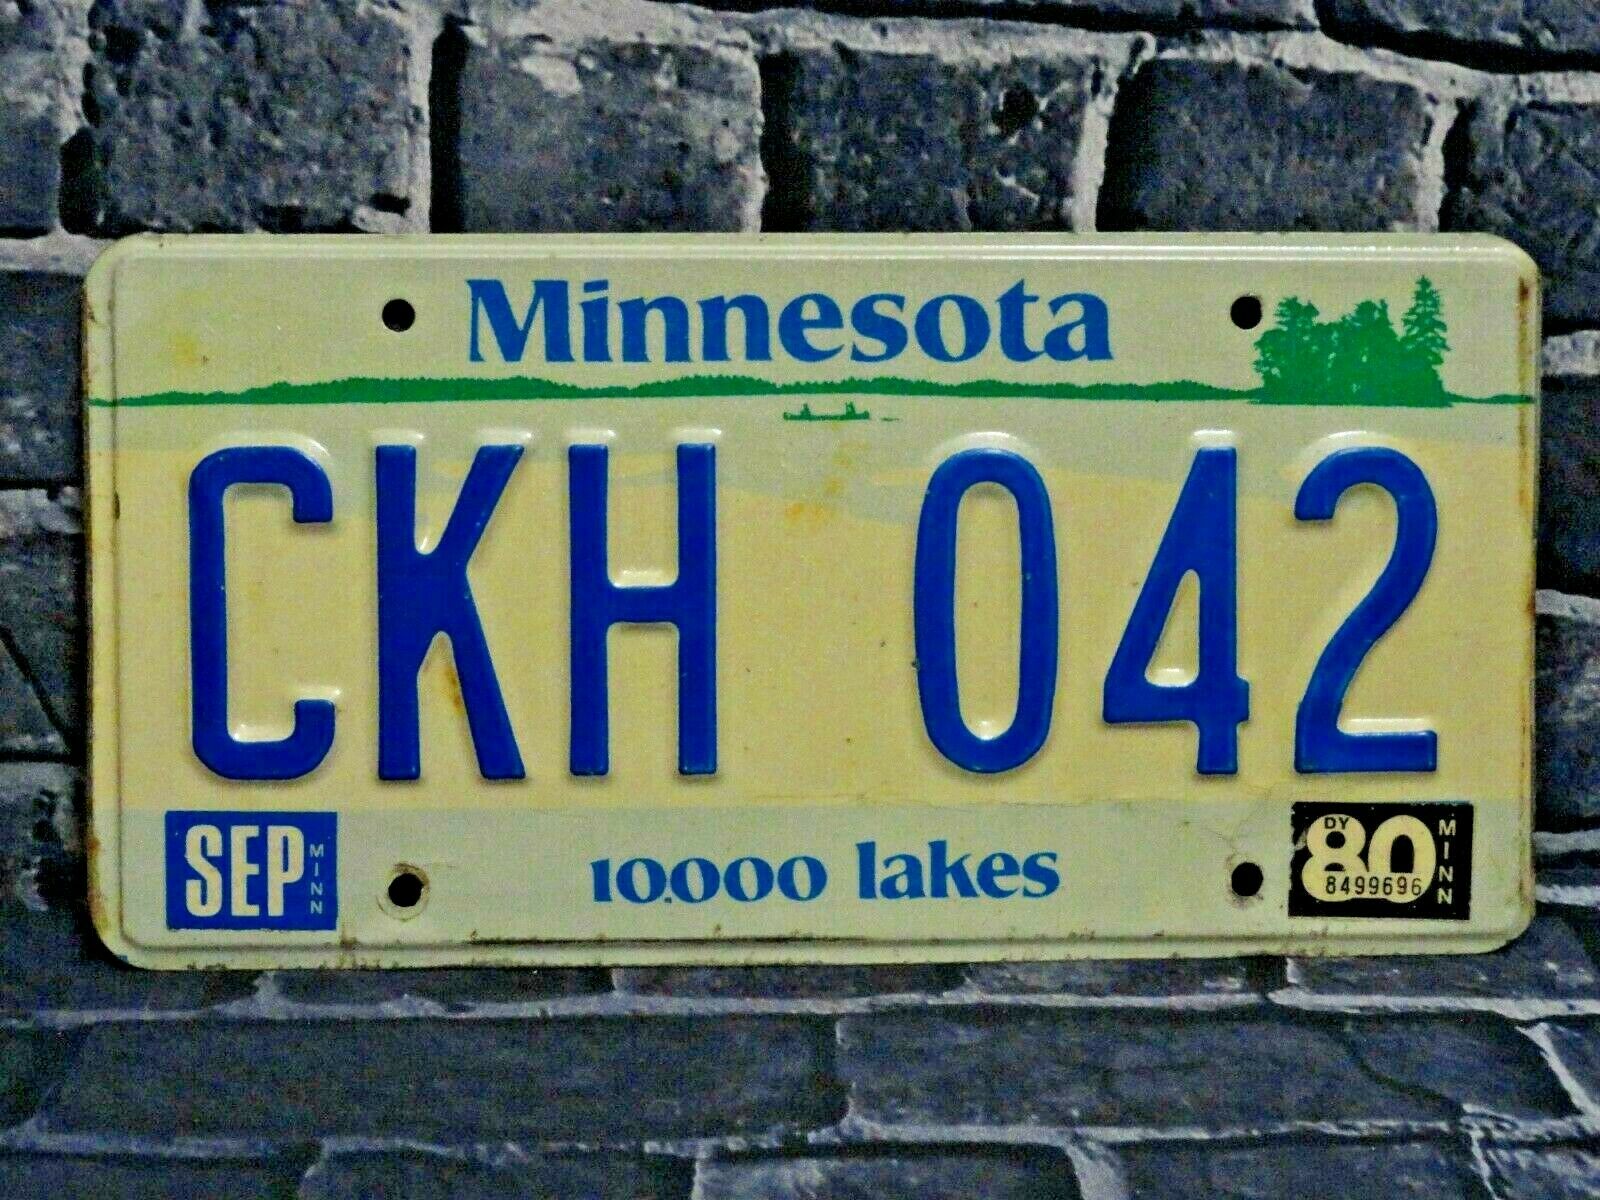 1978 Minnesota License Plate Ckh 042 Nice Condition 10,000 Lakes 80 Sticker